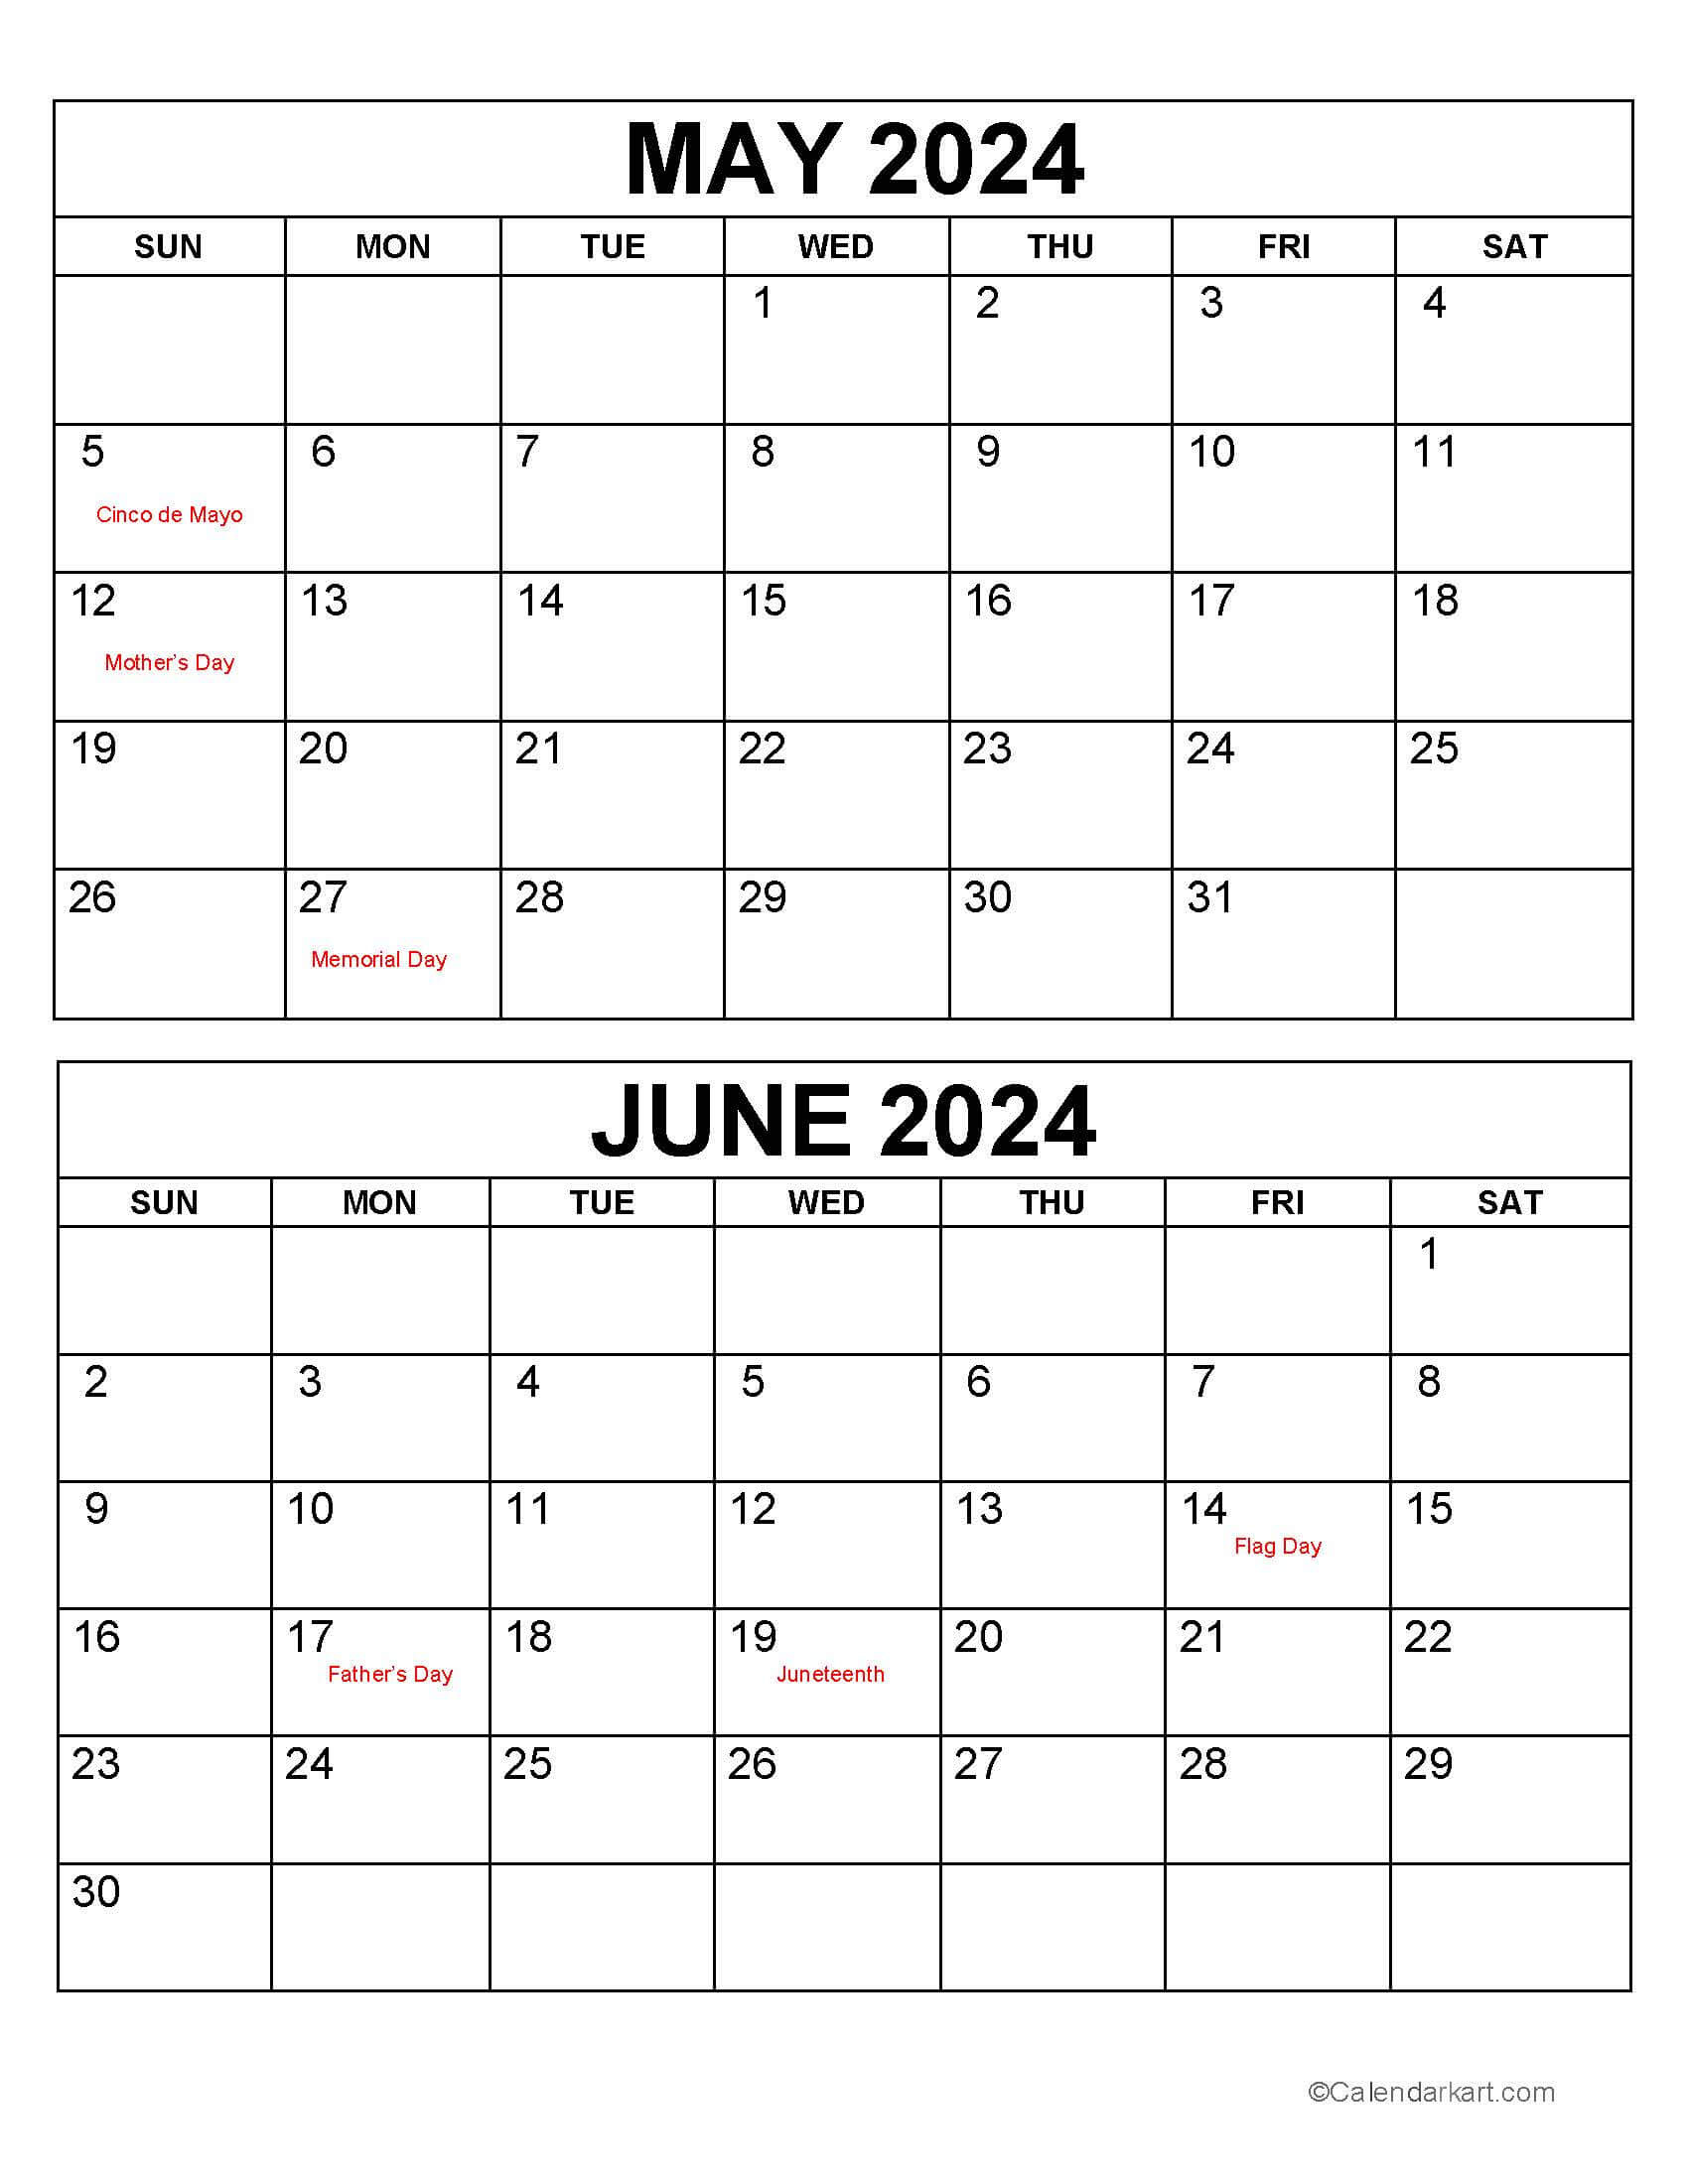 May June 2024 Calendars (3Rd Bi-Monthly) - Calendarkart with regard to Calendar May June 2024